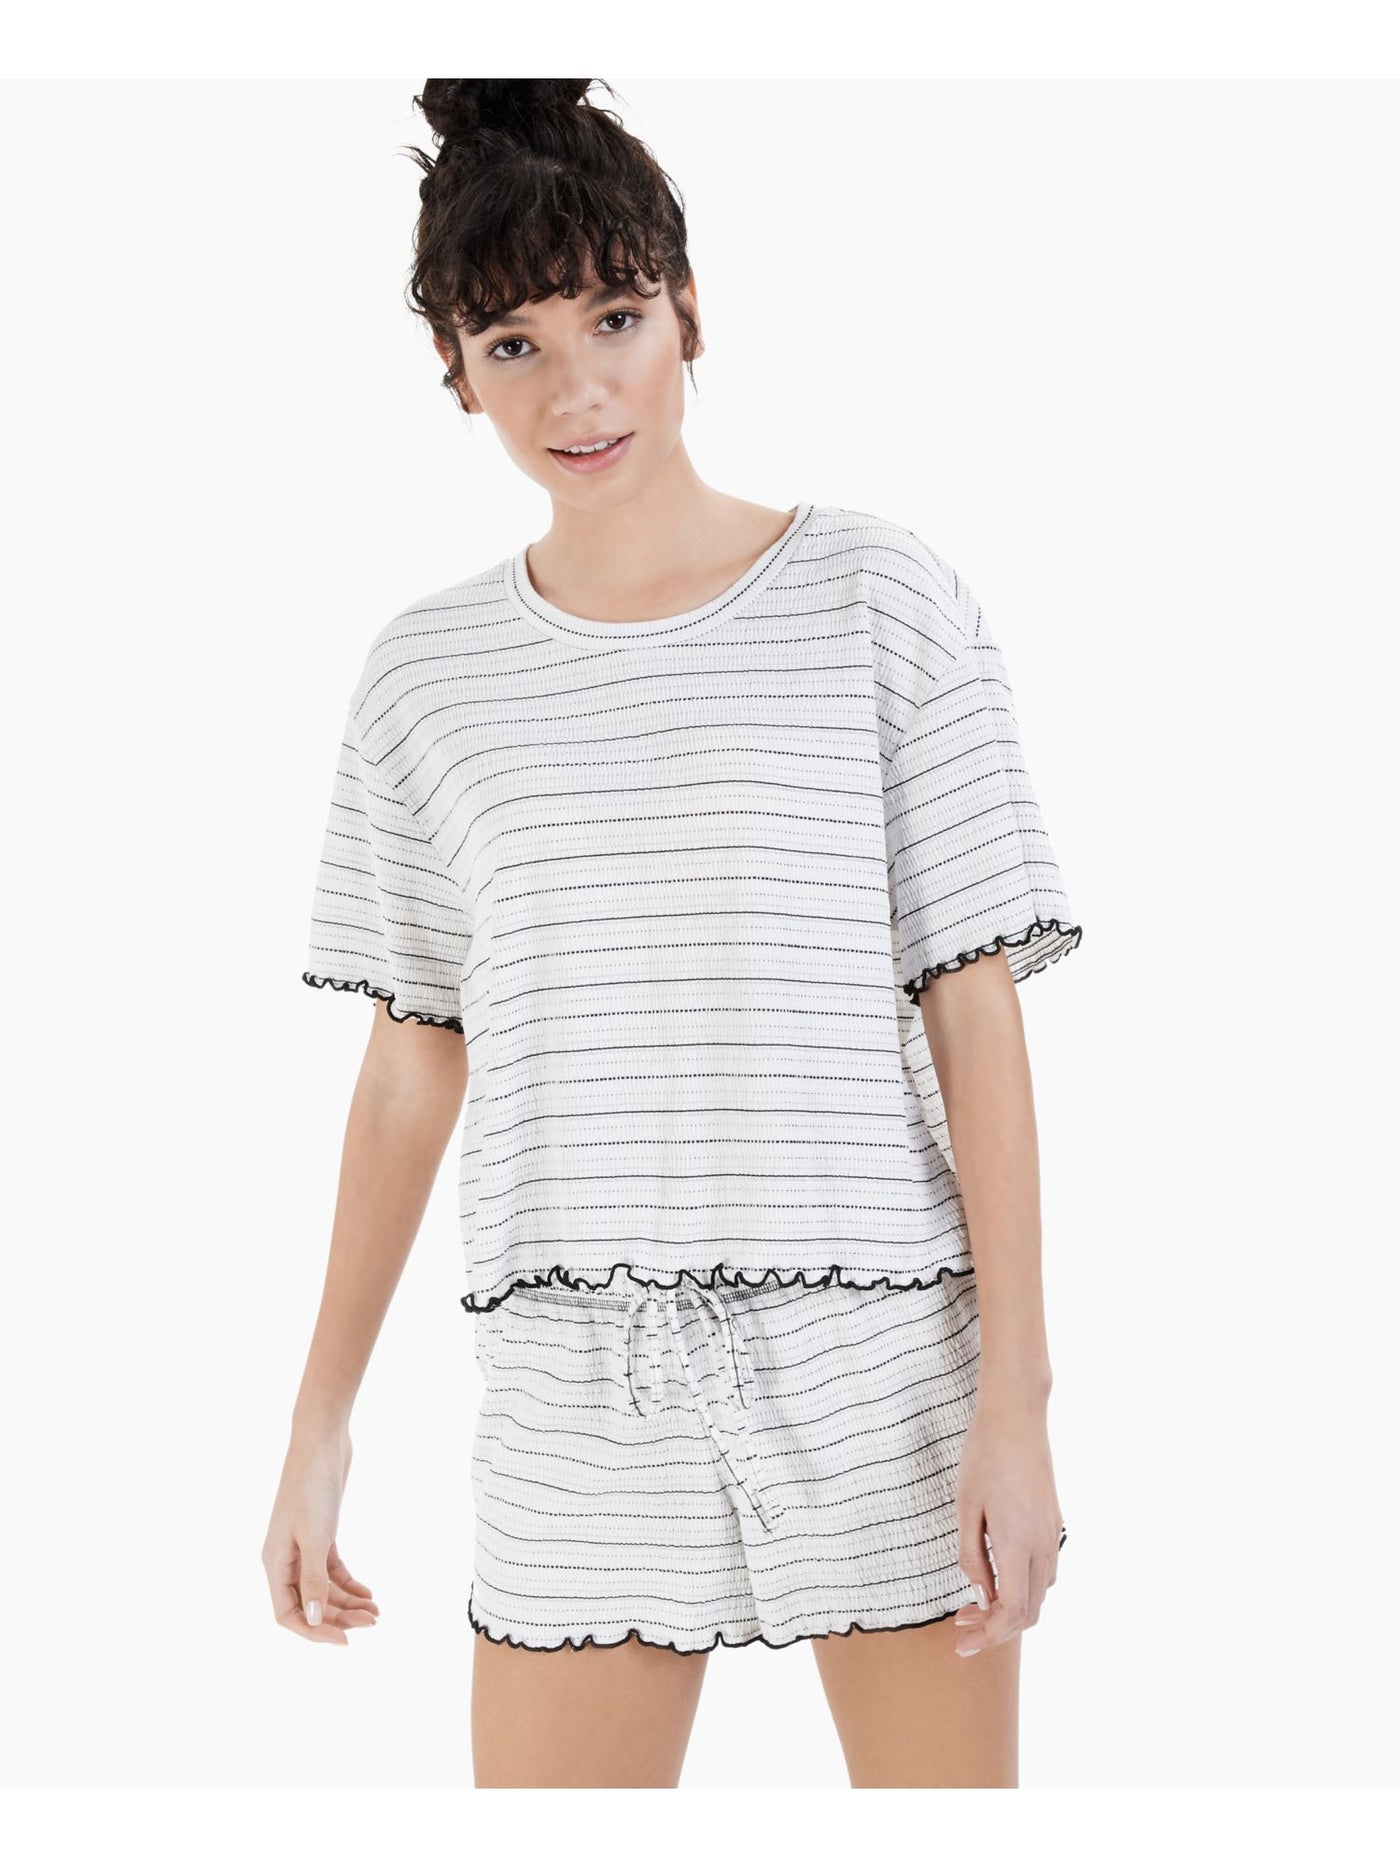 JENNI Womens White Striped Textured Short Sleeve T-Shirt Top and Shorts Pajamas M